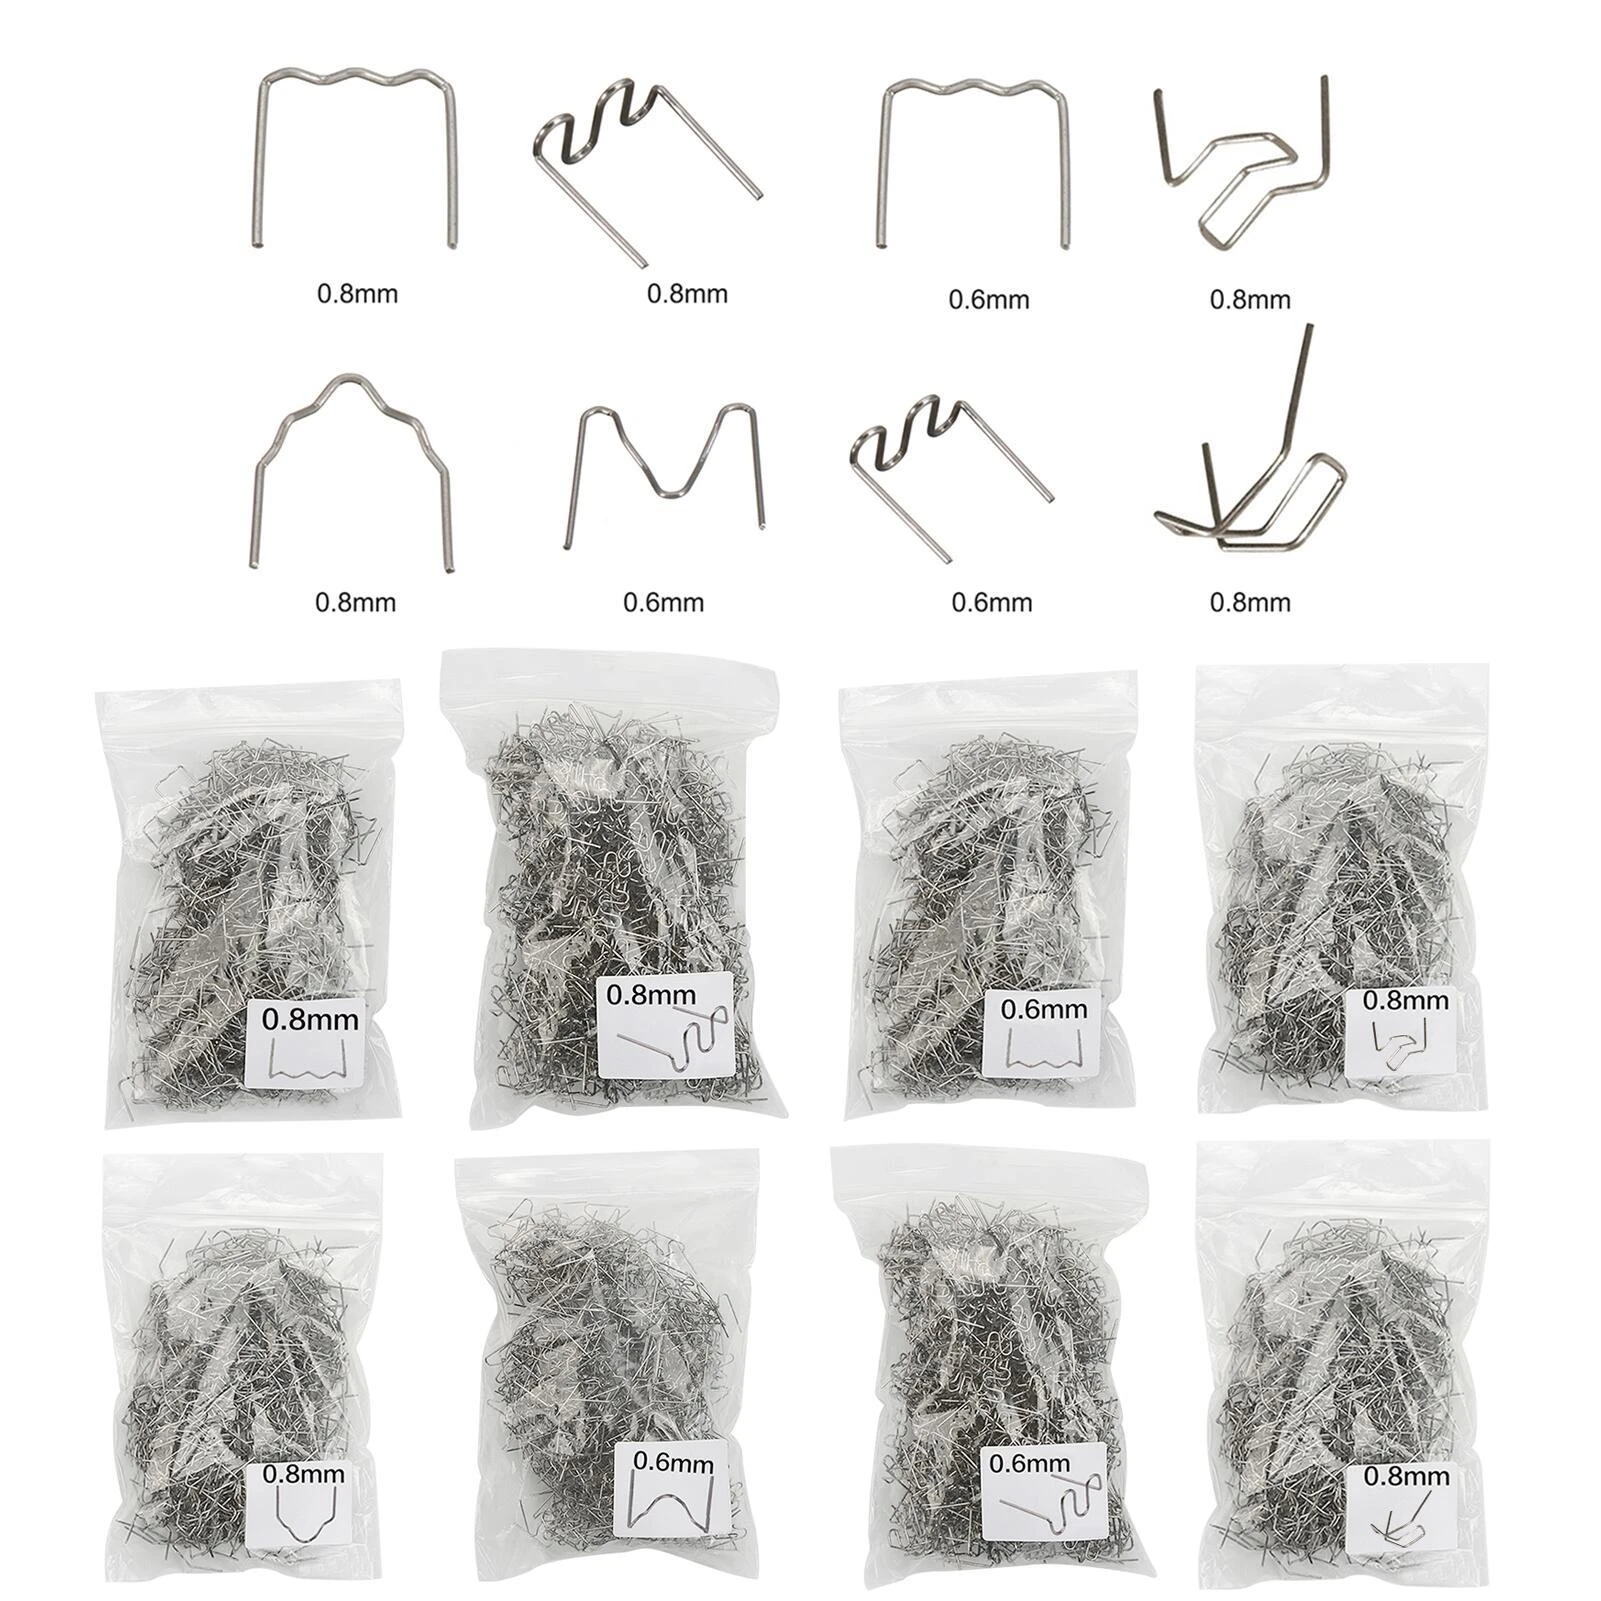 0.8mm Welding Nail Standard Wave Staples For Plastic Stapler Repair Kits Welders